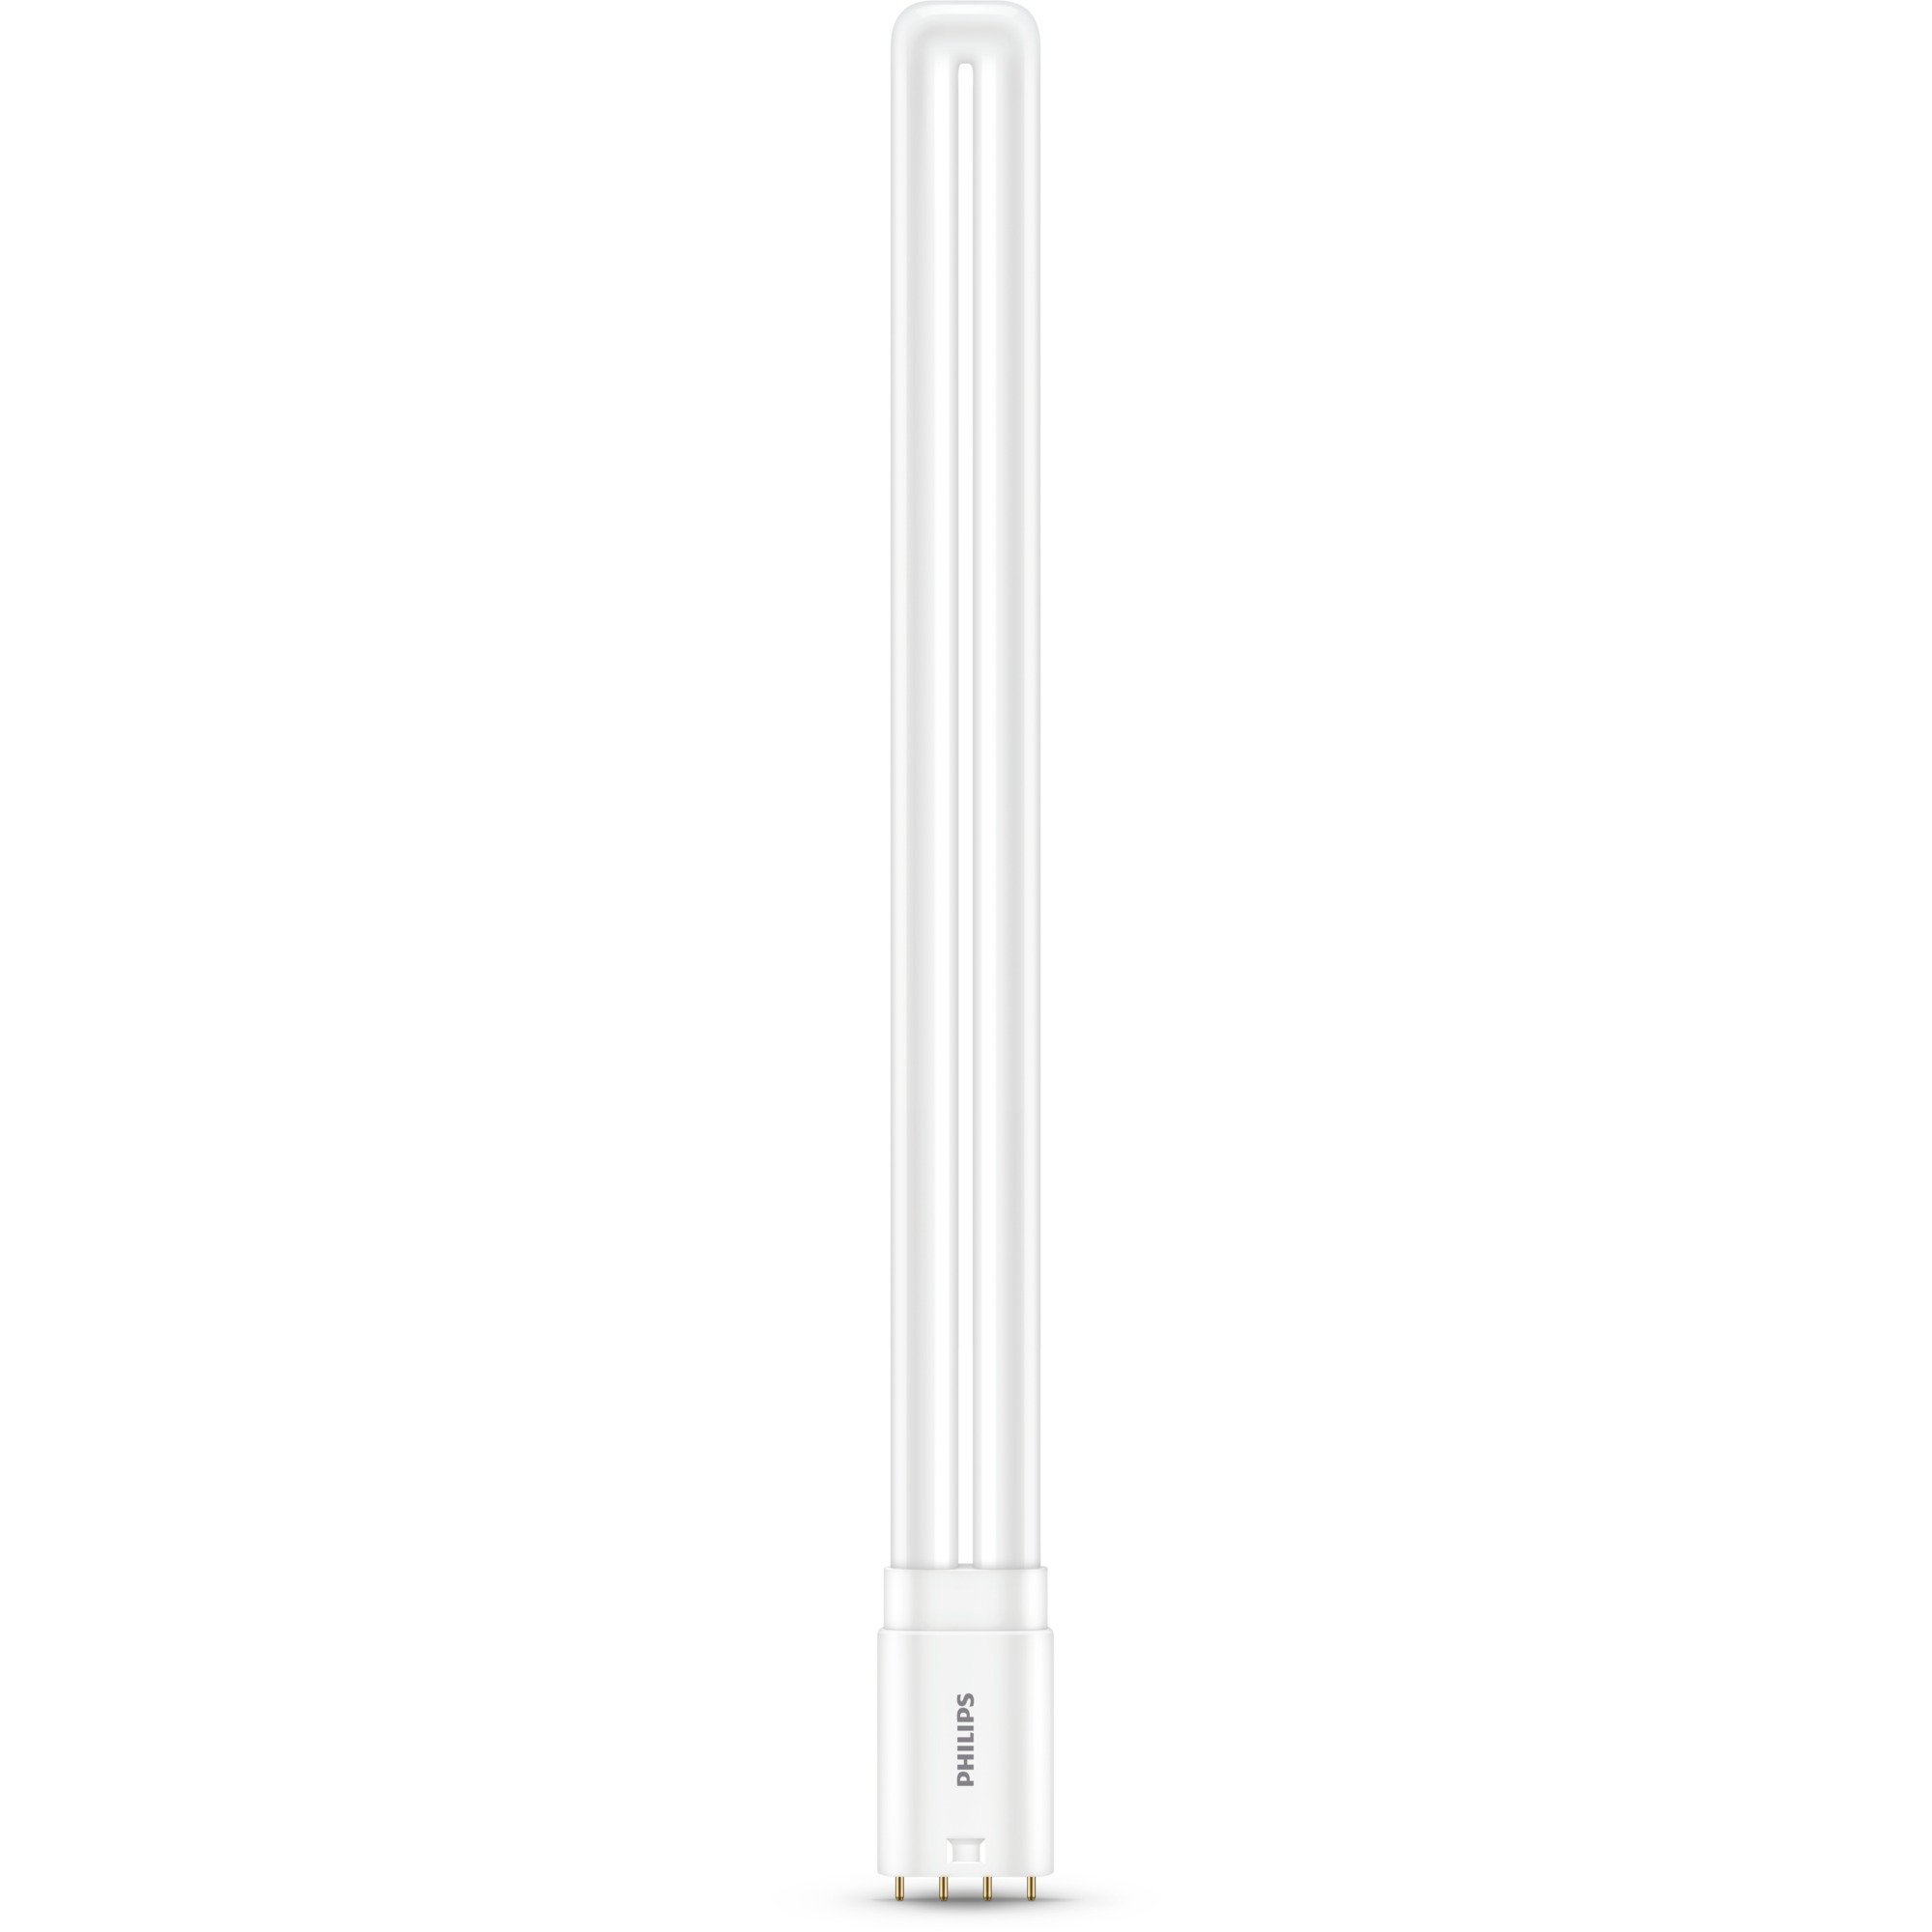 Image of Alternate - CorePro LED PLL HF 24W 830 4P 2G11, LED-Lampe online einkaufen bei Alternate